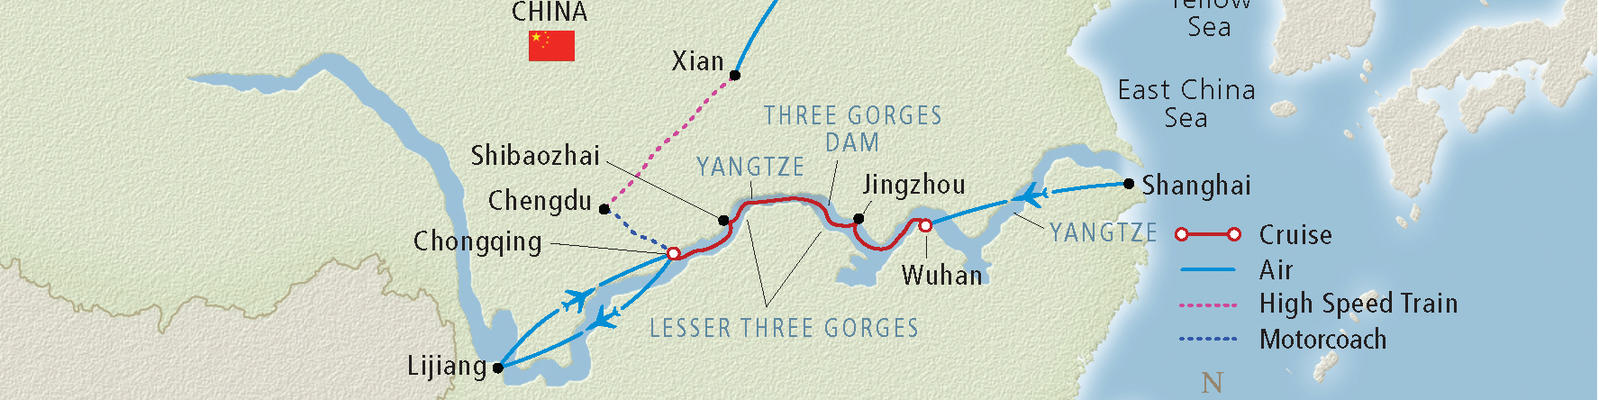 yangtze river cruise map